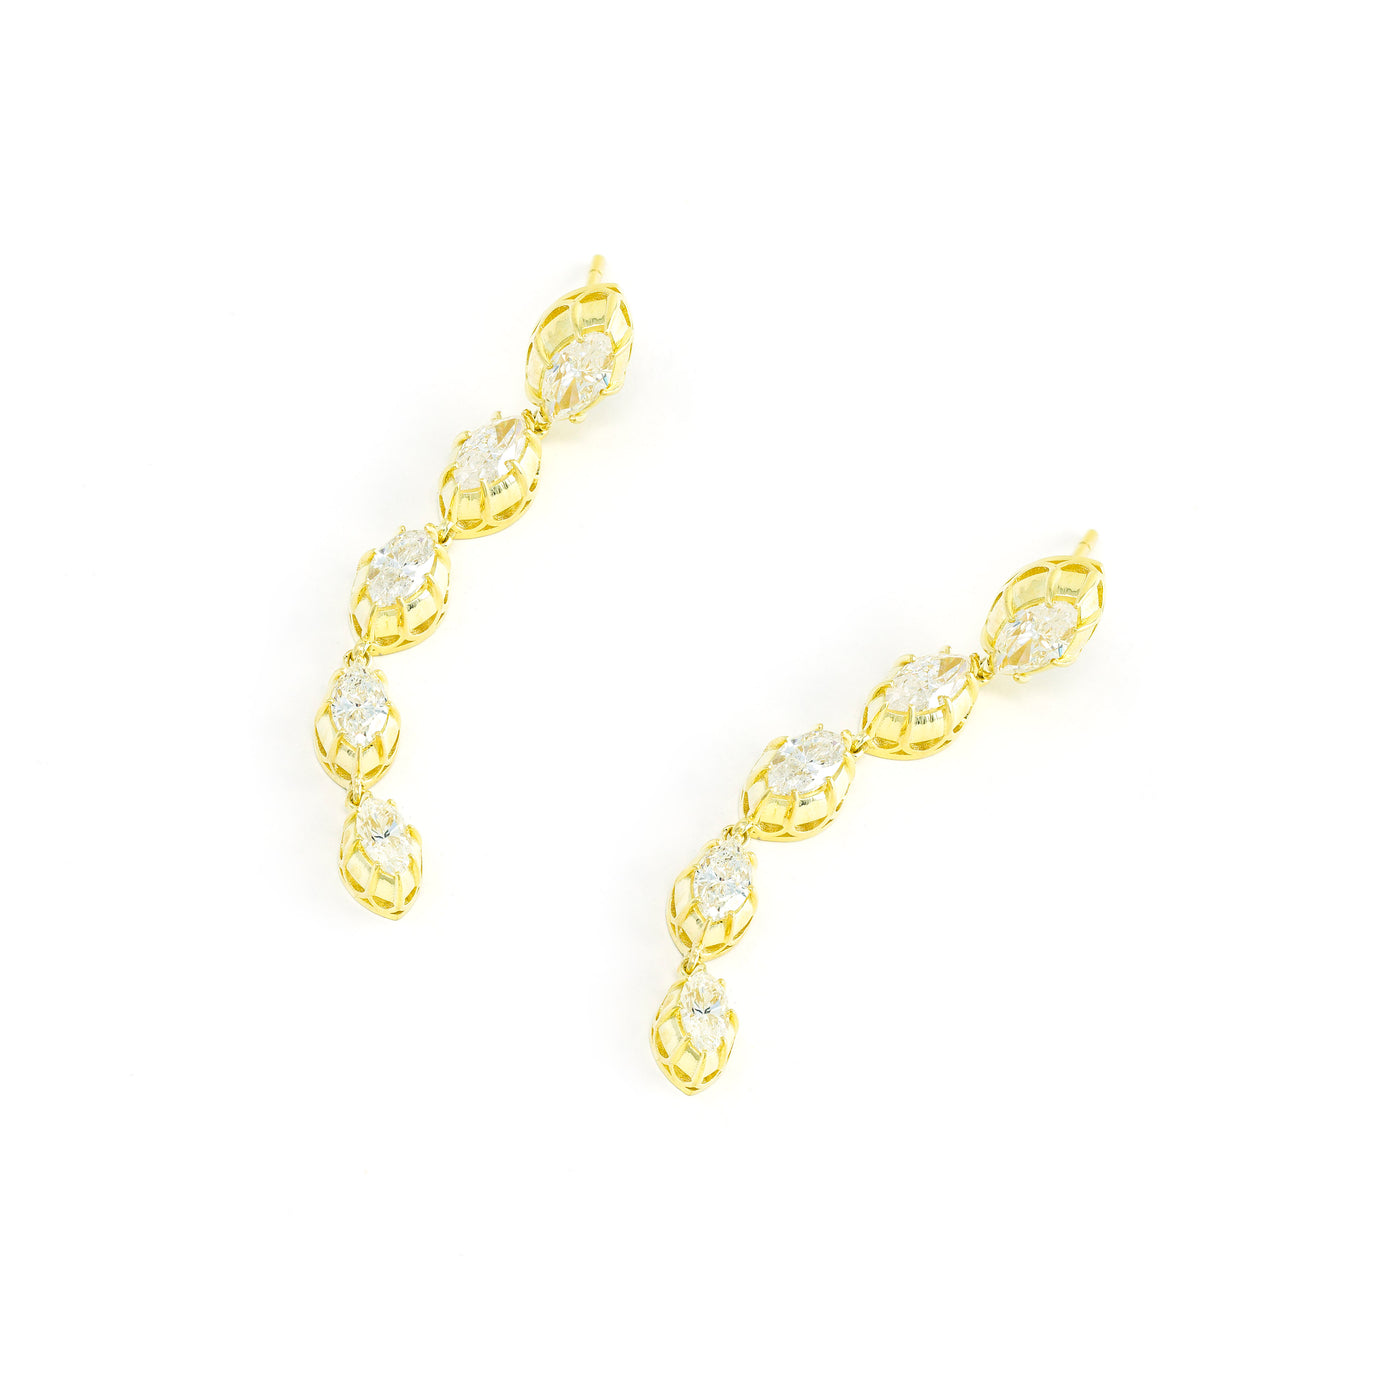 Vertical Marquise Diamond Earrings